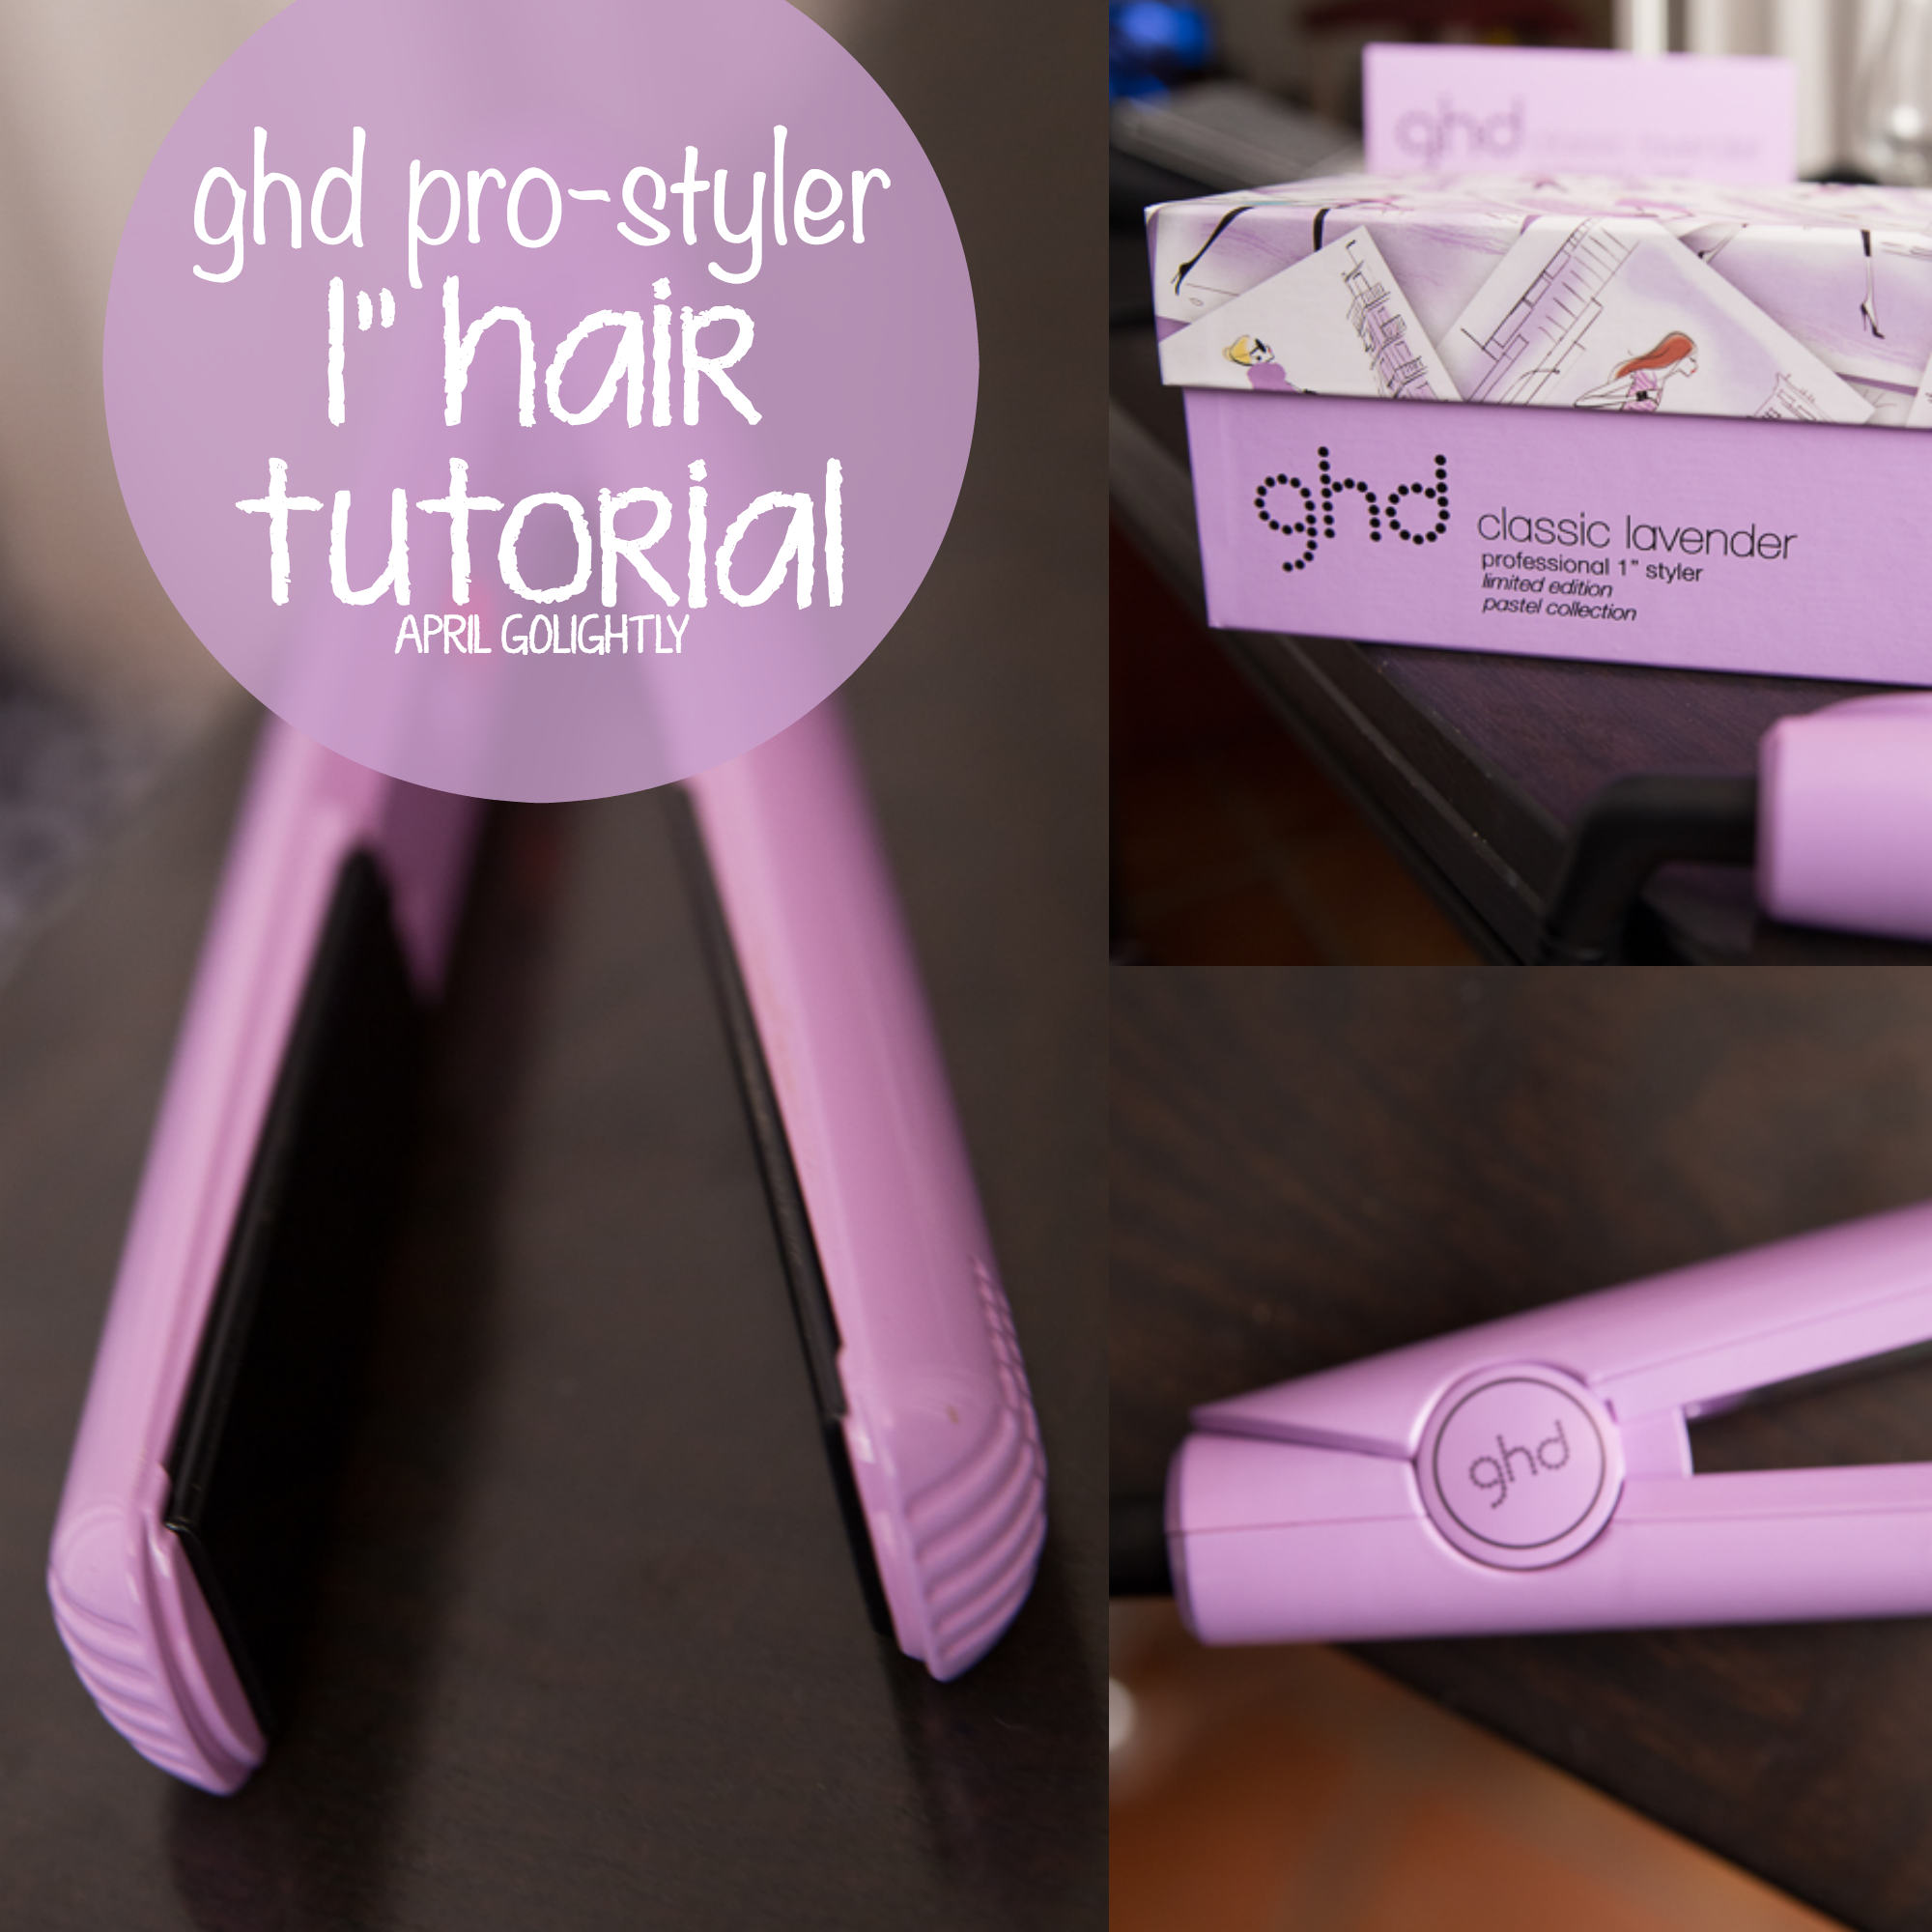 ghd pro-styler 1 hair tutorial